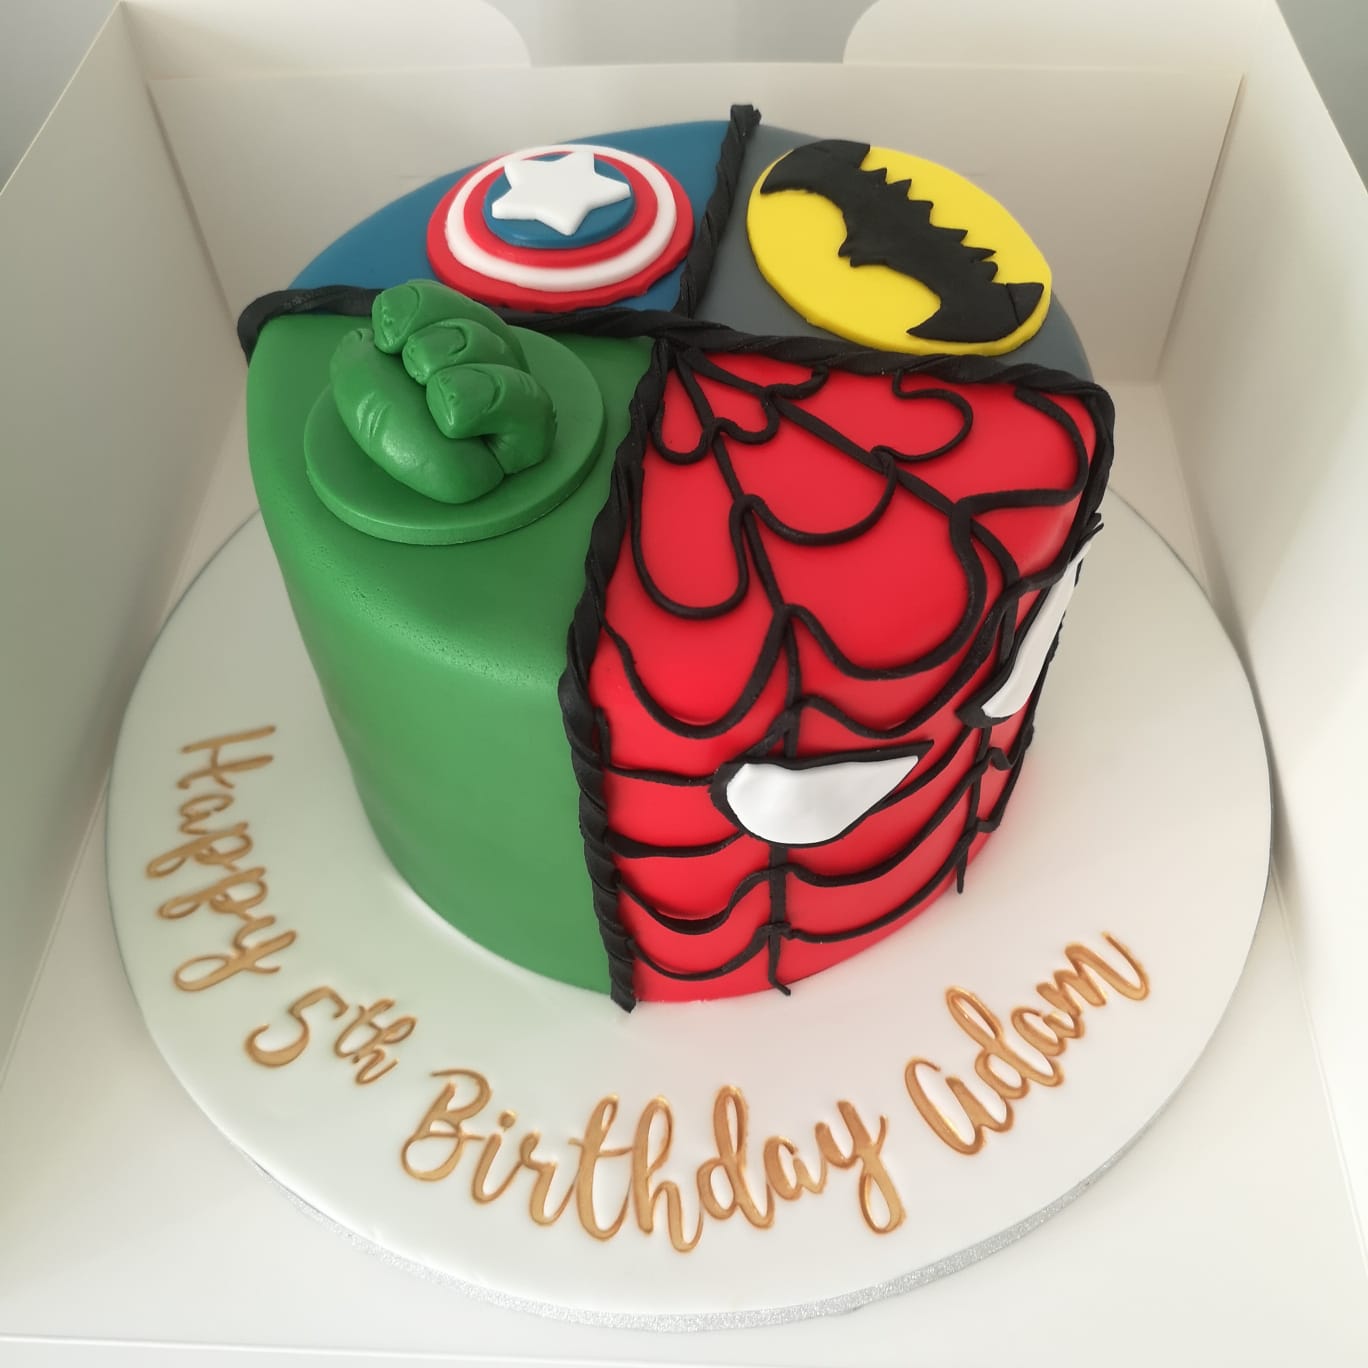 4 Popular Cartoon Birthday Cake Ideas for Kids - The Baker's Table